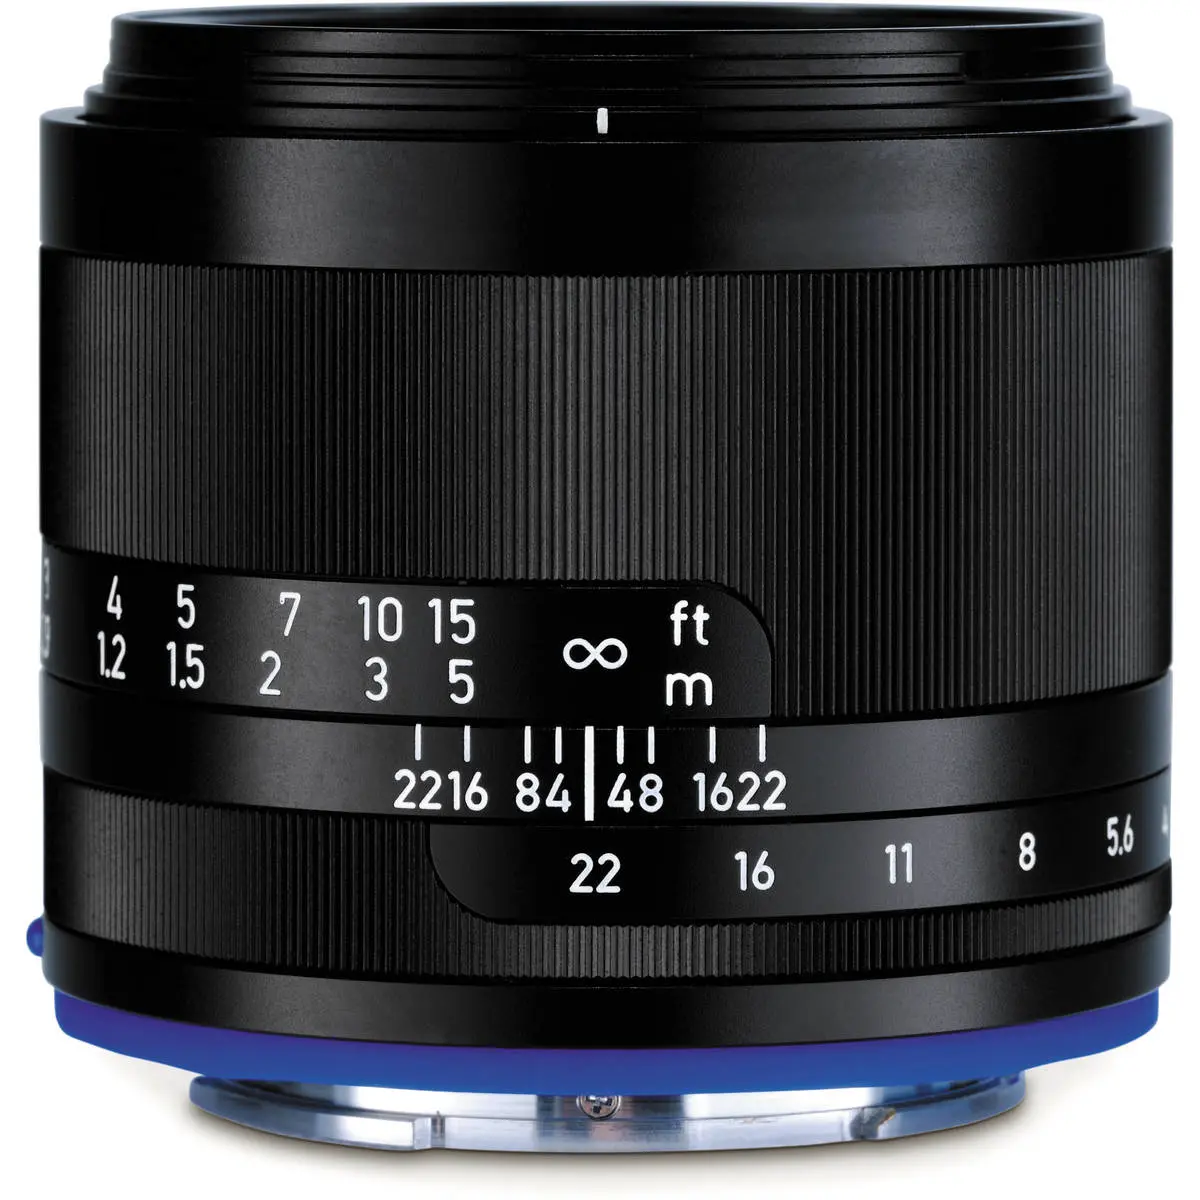 2. Carl Zeiss Loxia 50mm f/2 Planar T* (Sony E-Mount) Lens